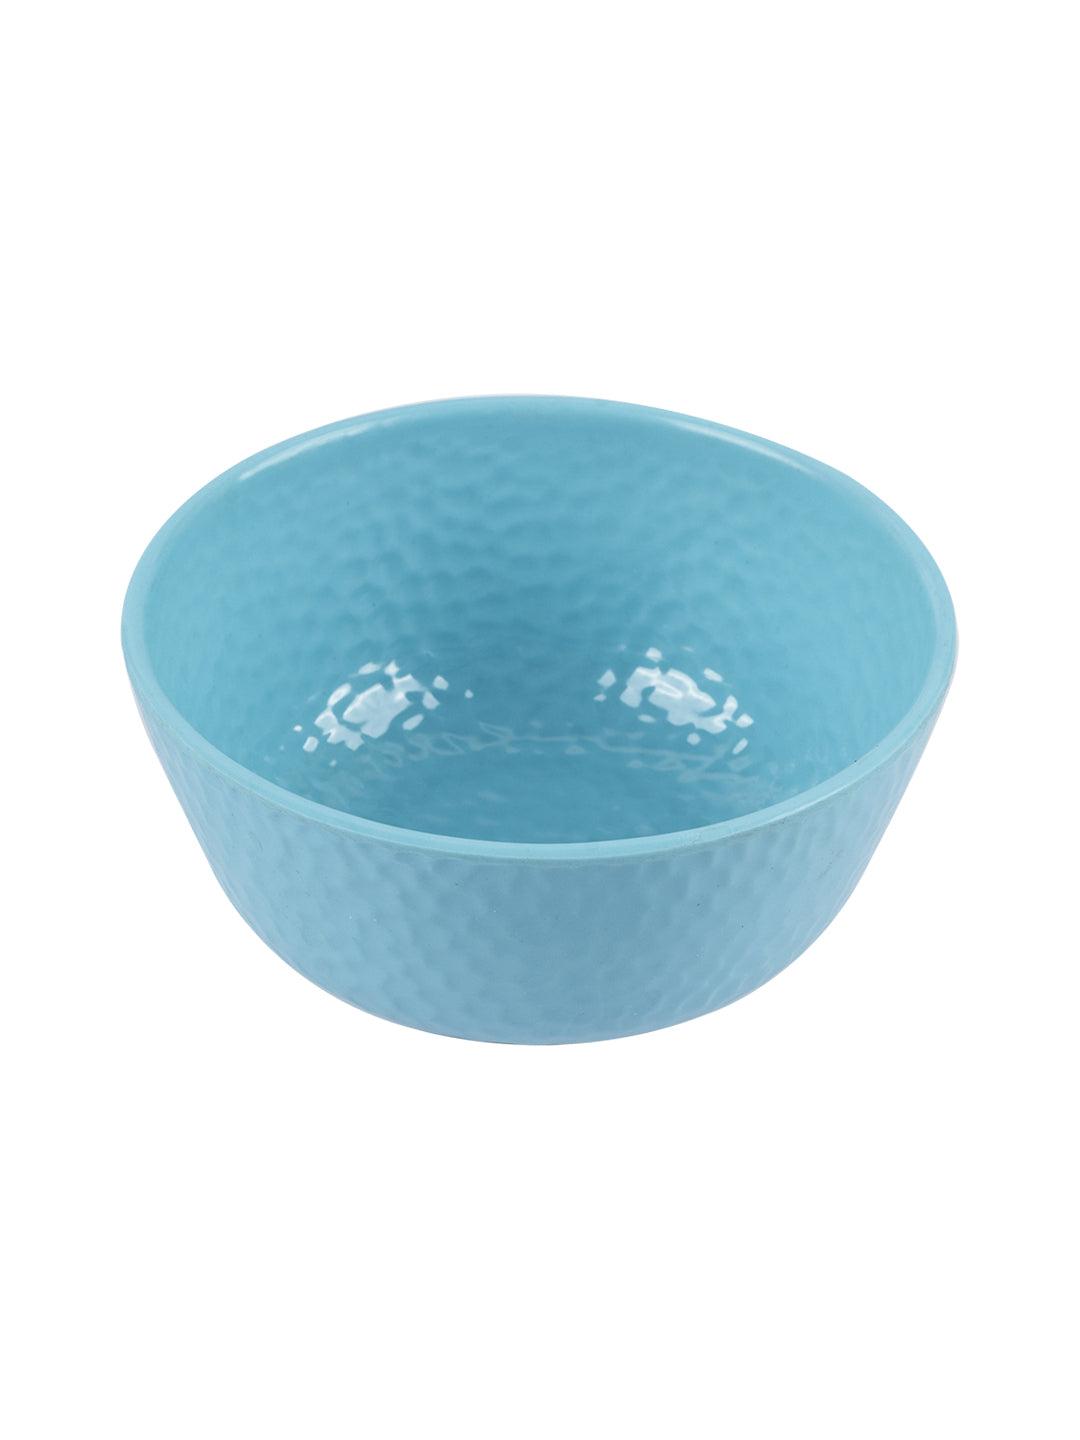 VON CASA Melamine Round Soup Bowl - Set of 6, Turquoise